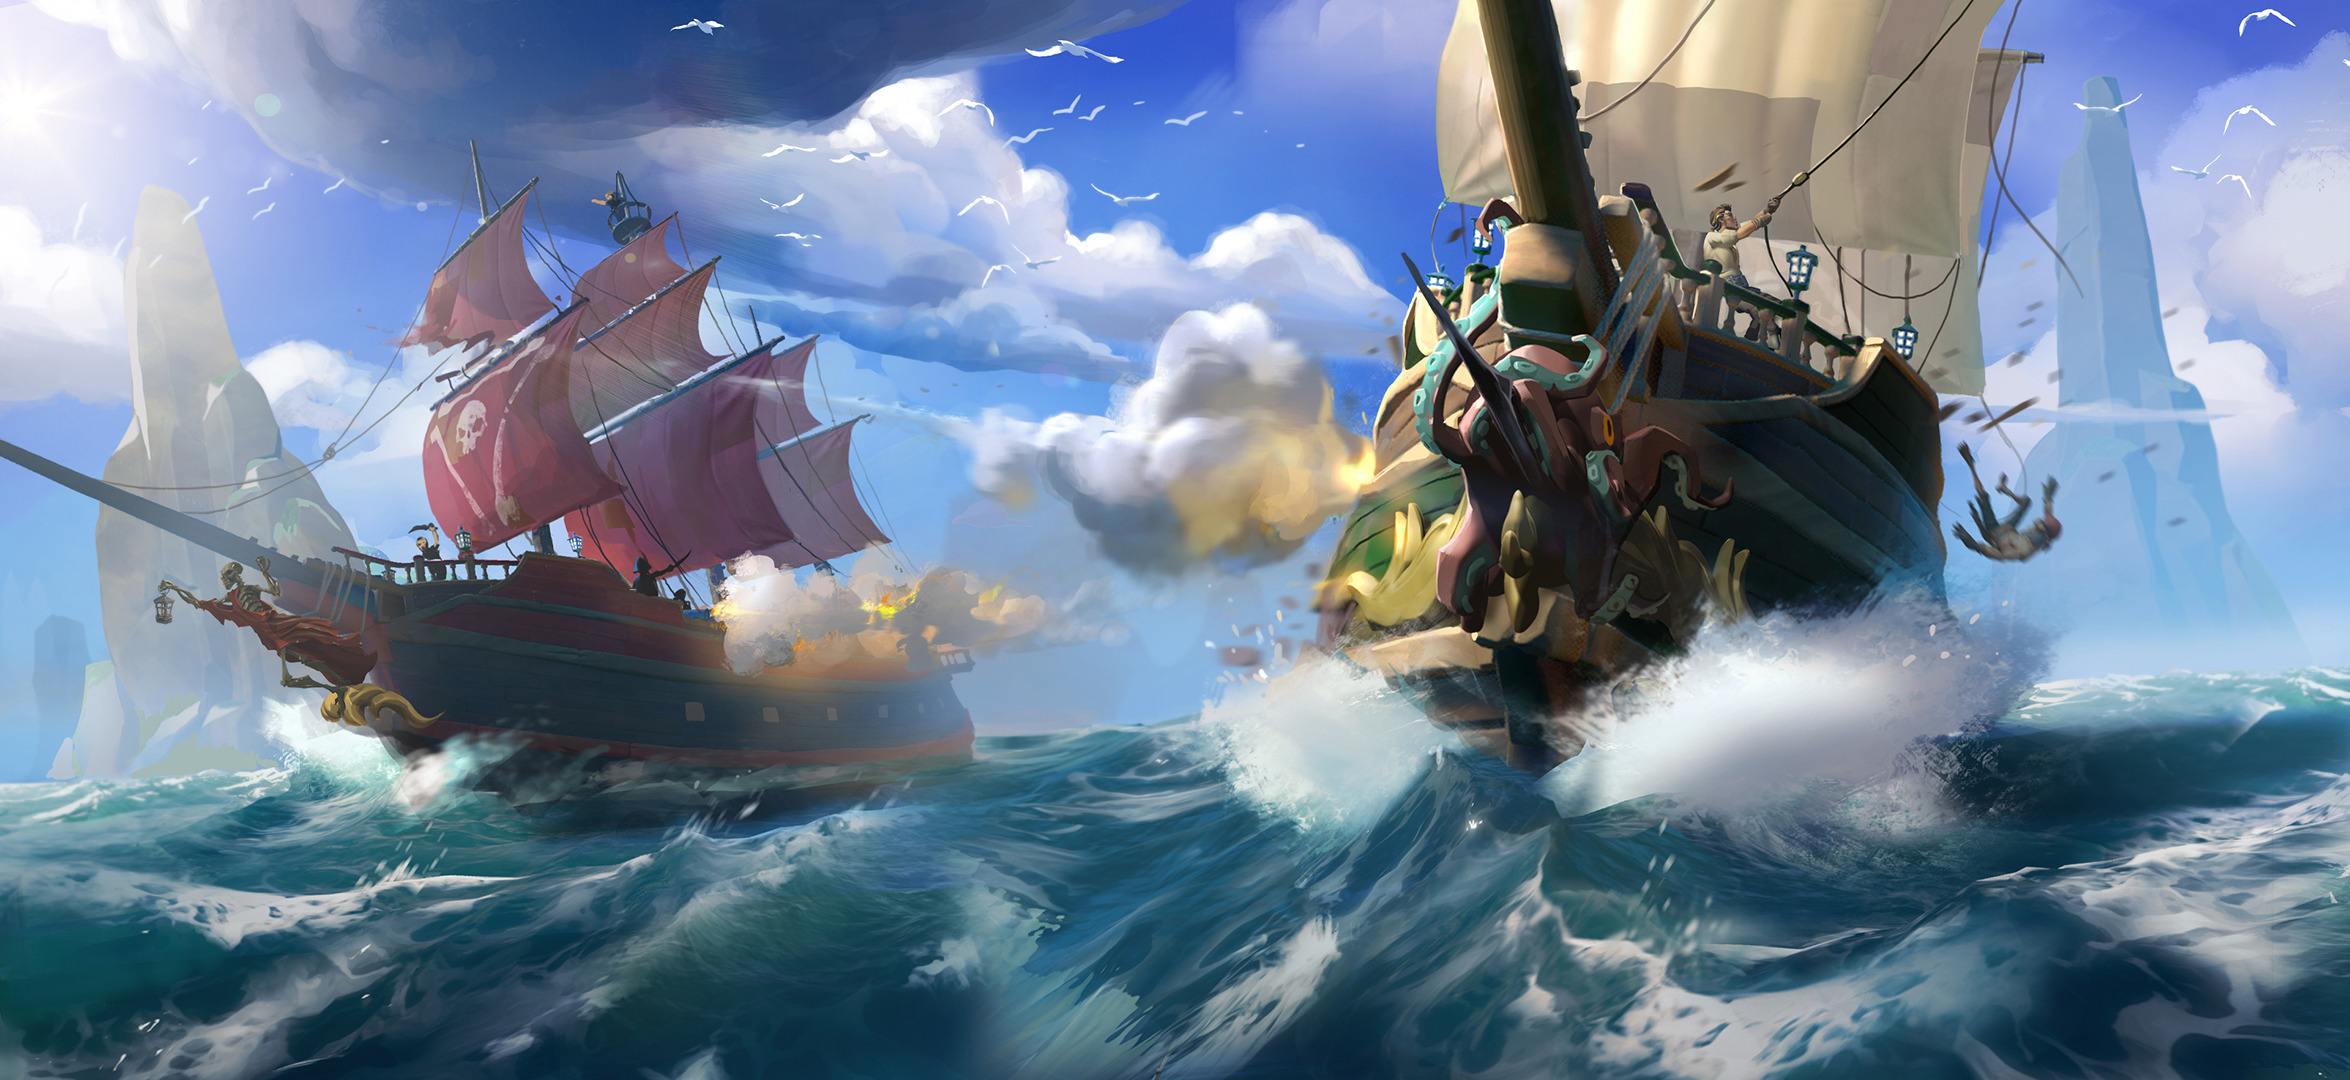 pirates, Fantasy art, Artwork, Sailing ship, Ship Wallpaper